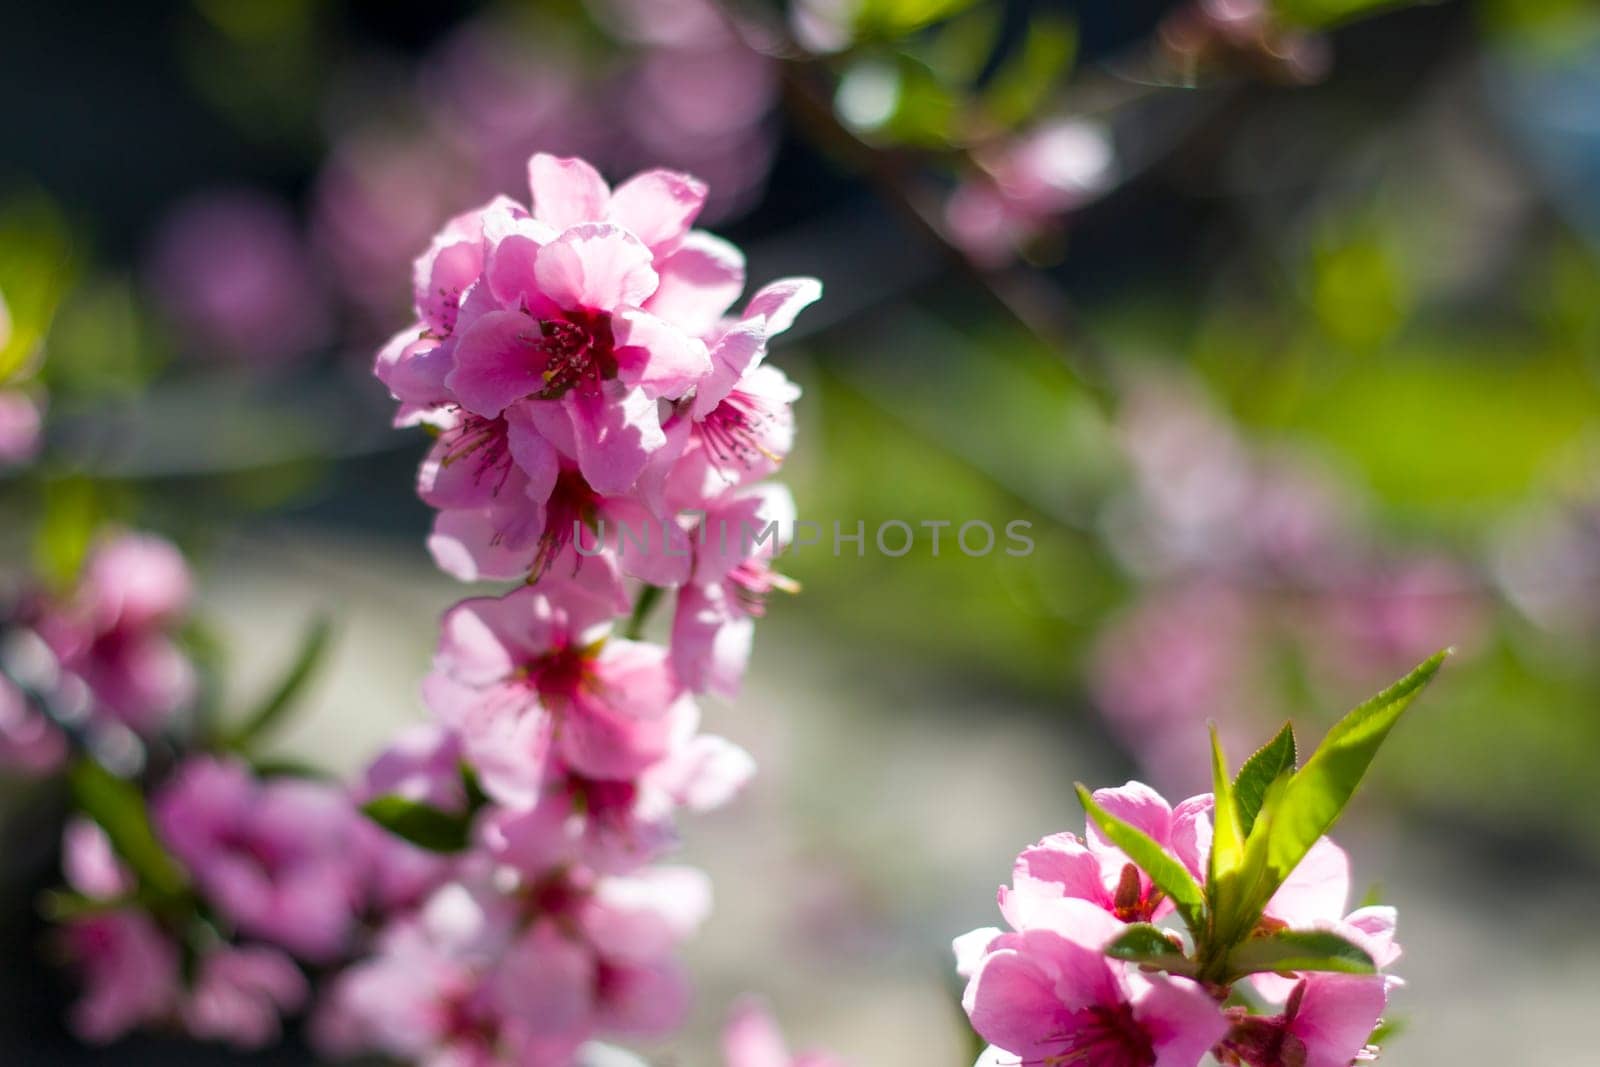 Peach nectarine spring flowers blossom on branch. Agriculture beautiful season farming springtime landscape